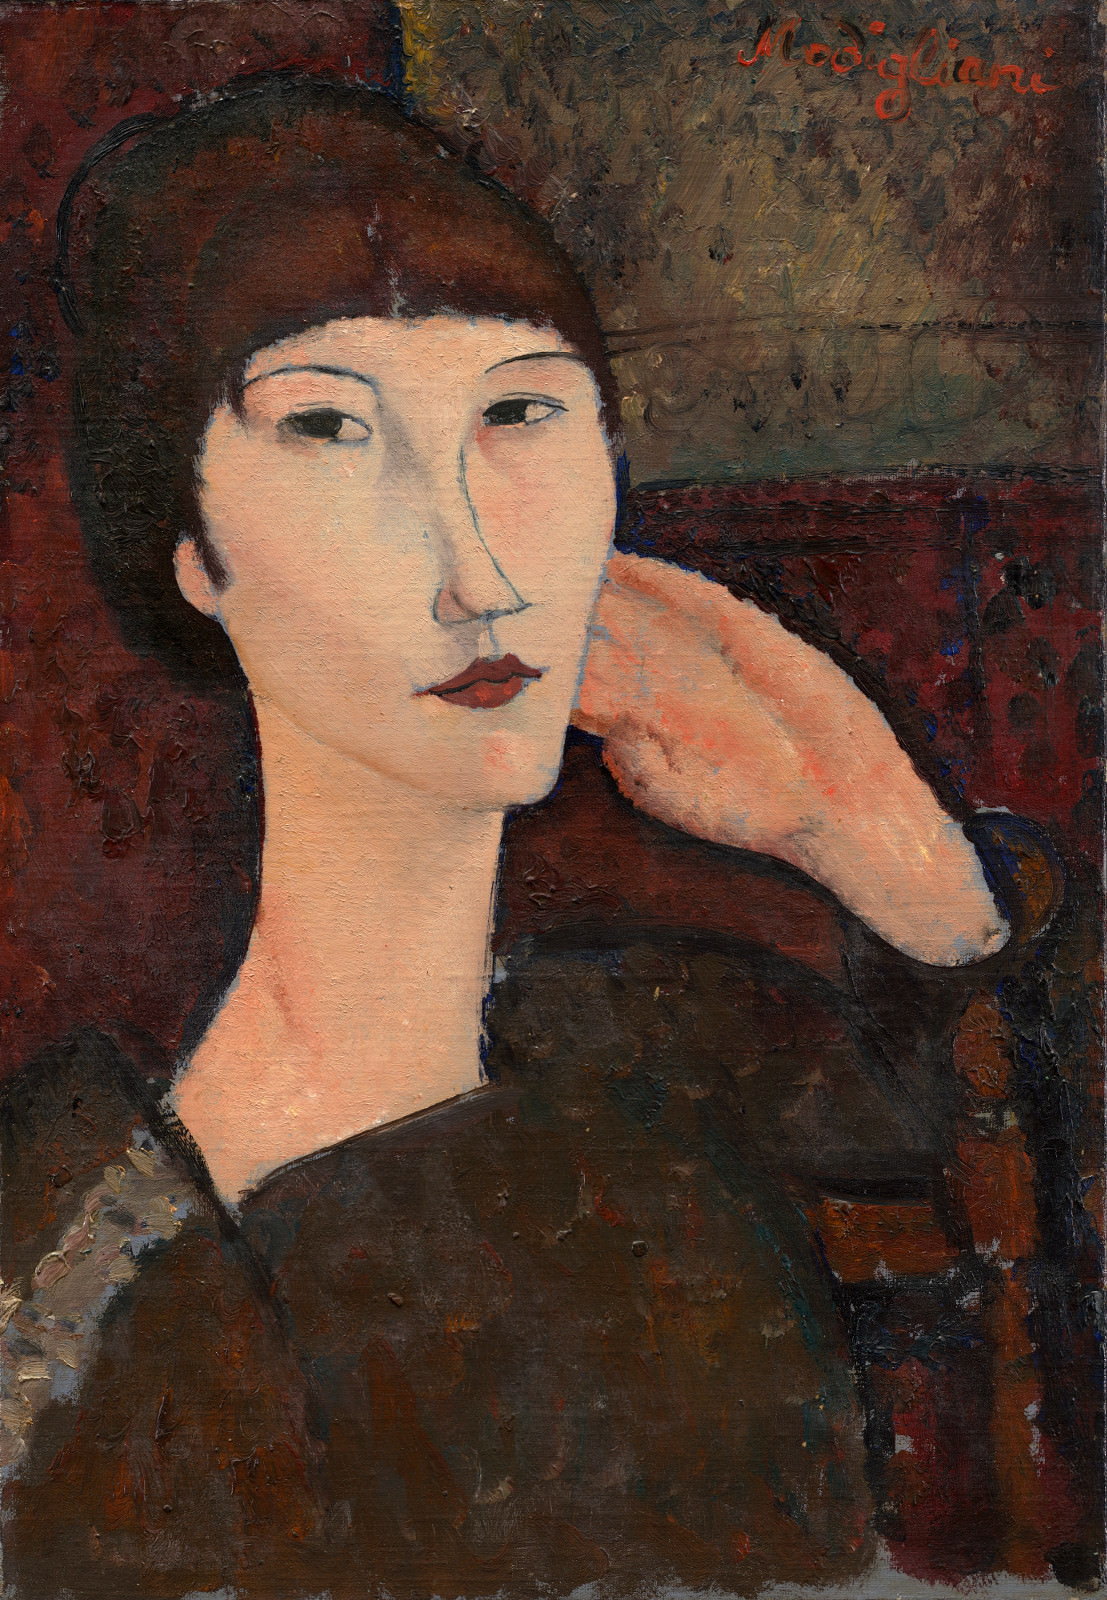 Figue. 8 - Adrienne (Femme avec Bangs), Amedeo Modigliani, 1917, L'huile de lin sur, 55.3 x 38.1 cm. National Gallery of Art, Washington. Chester Dale Collection.